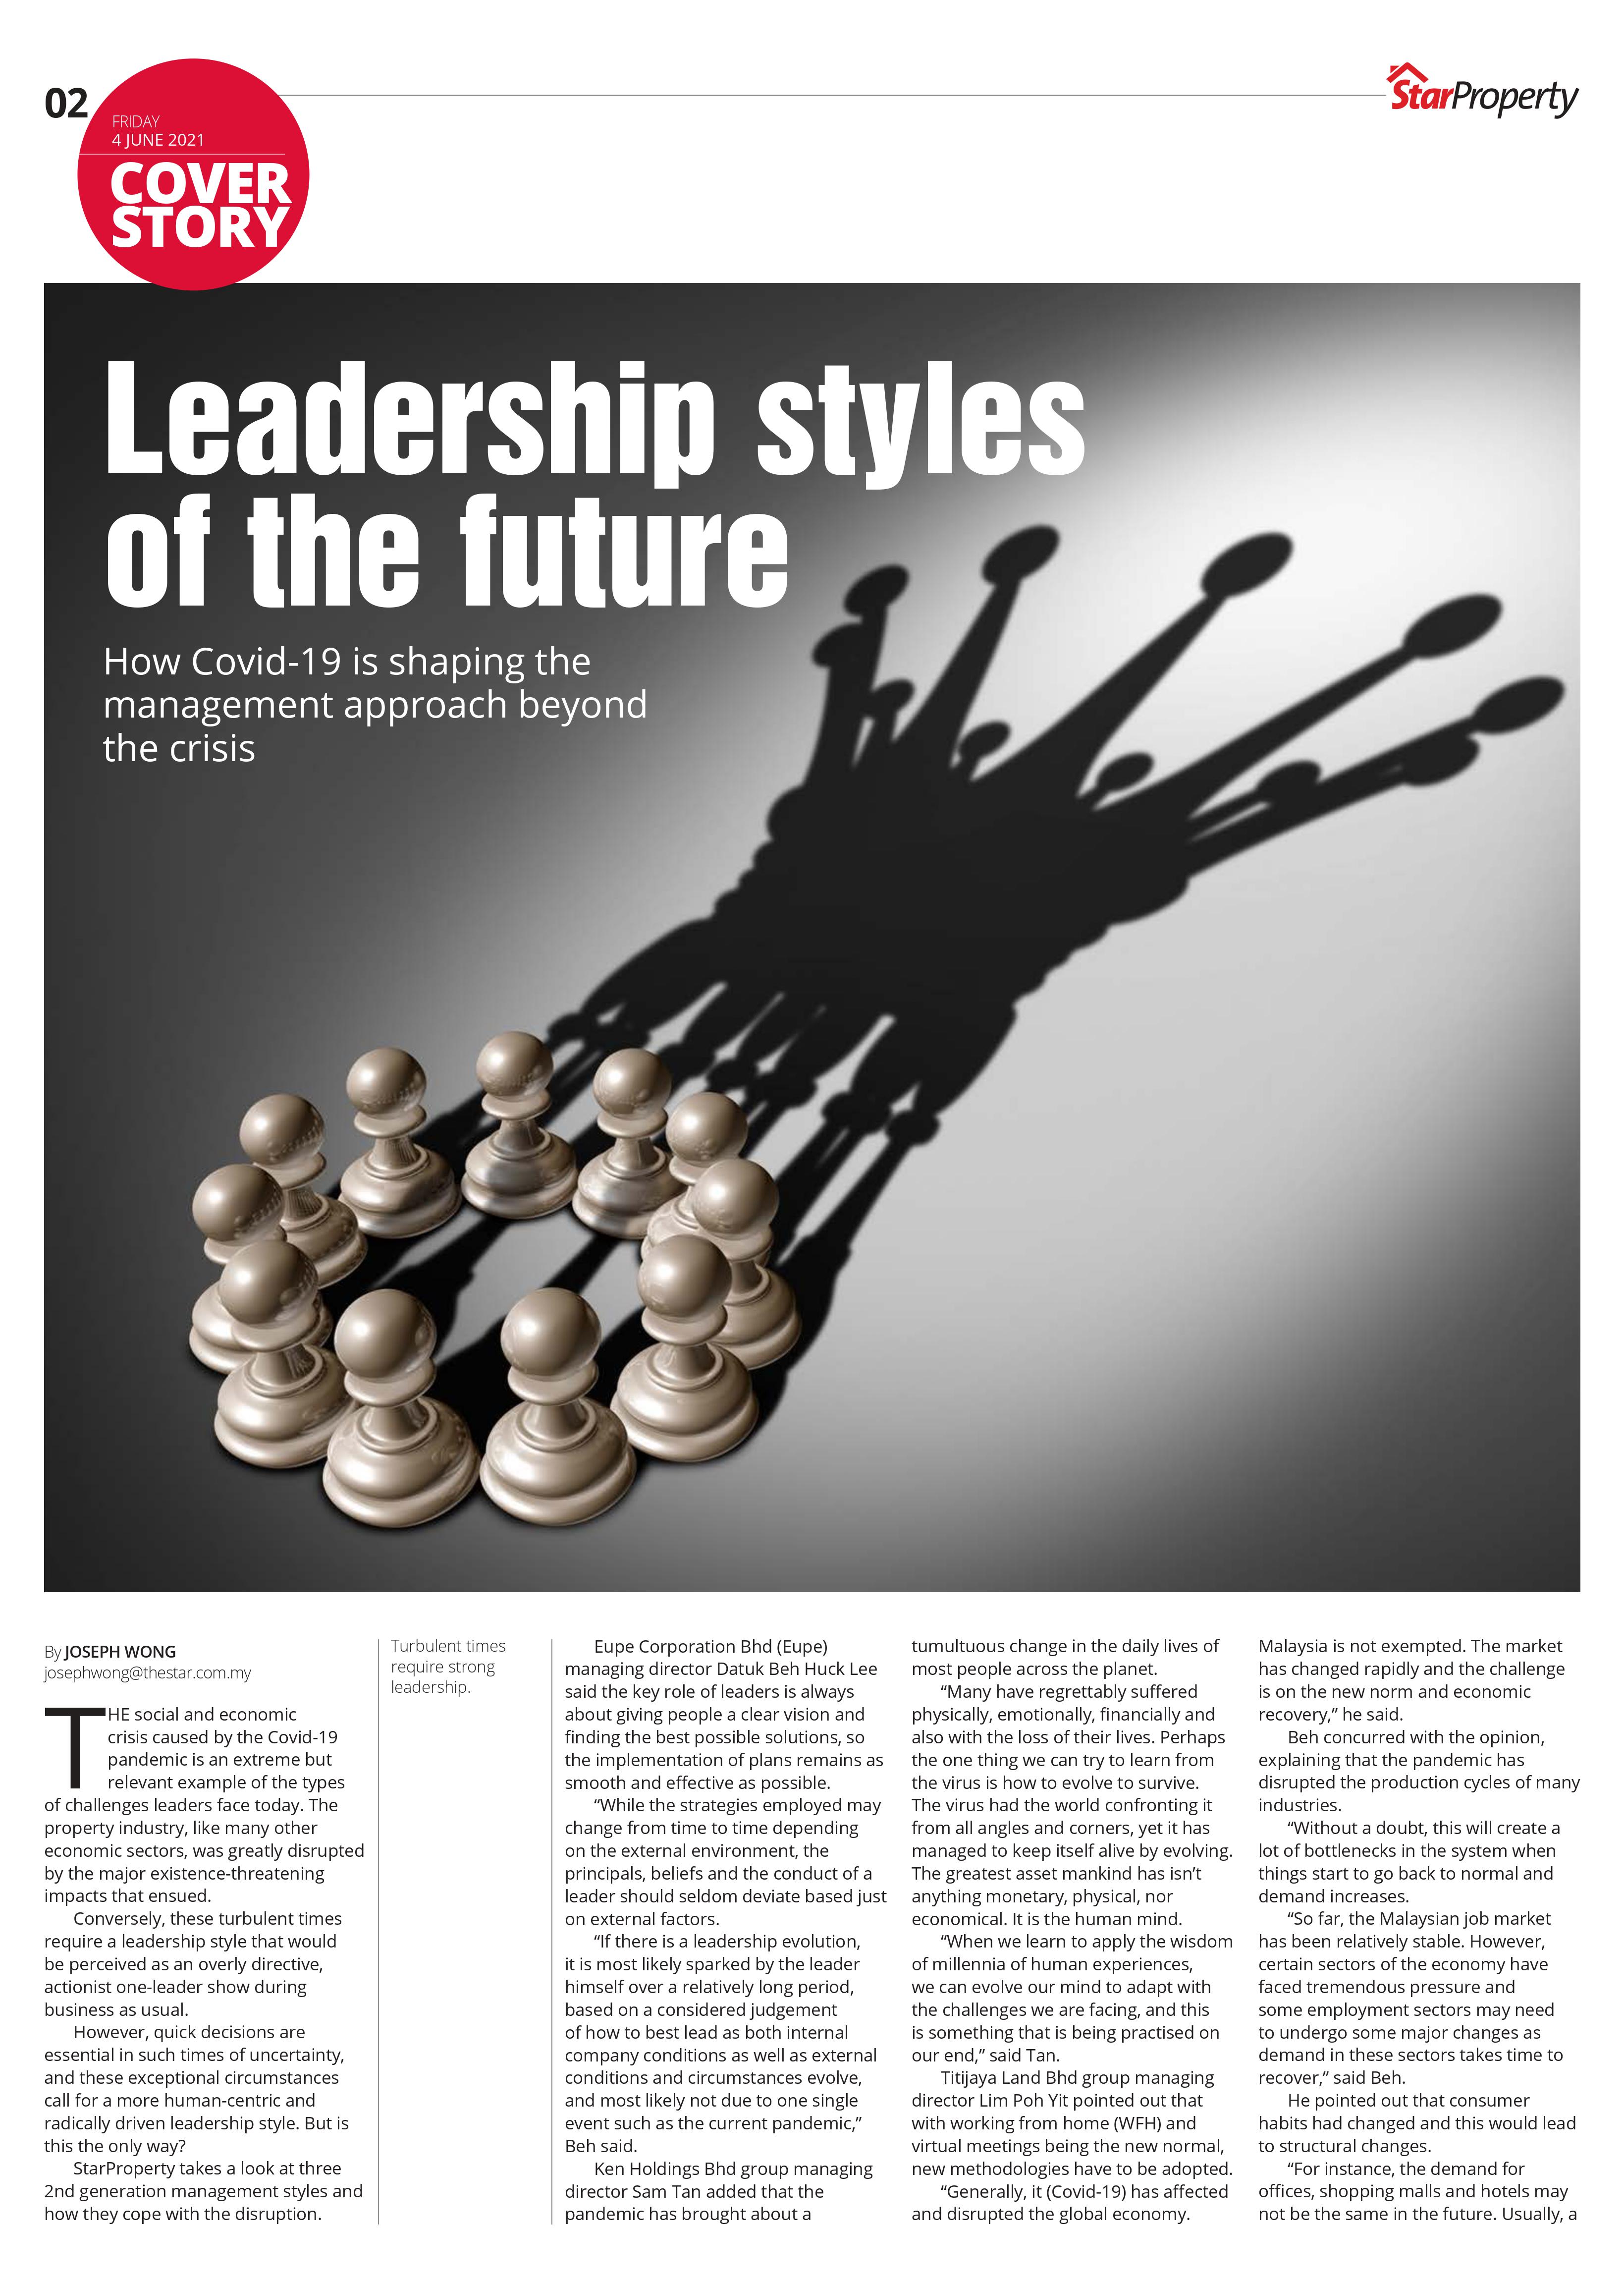 StarProperty: Leadership Styles of the Future